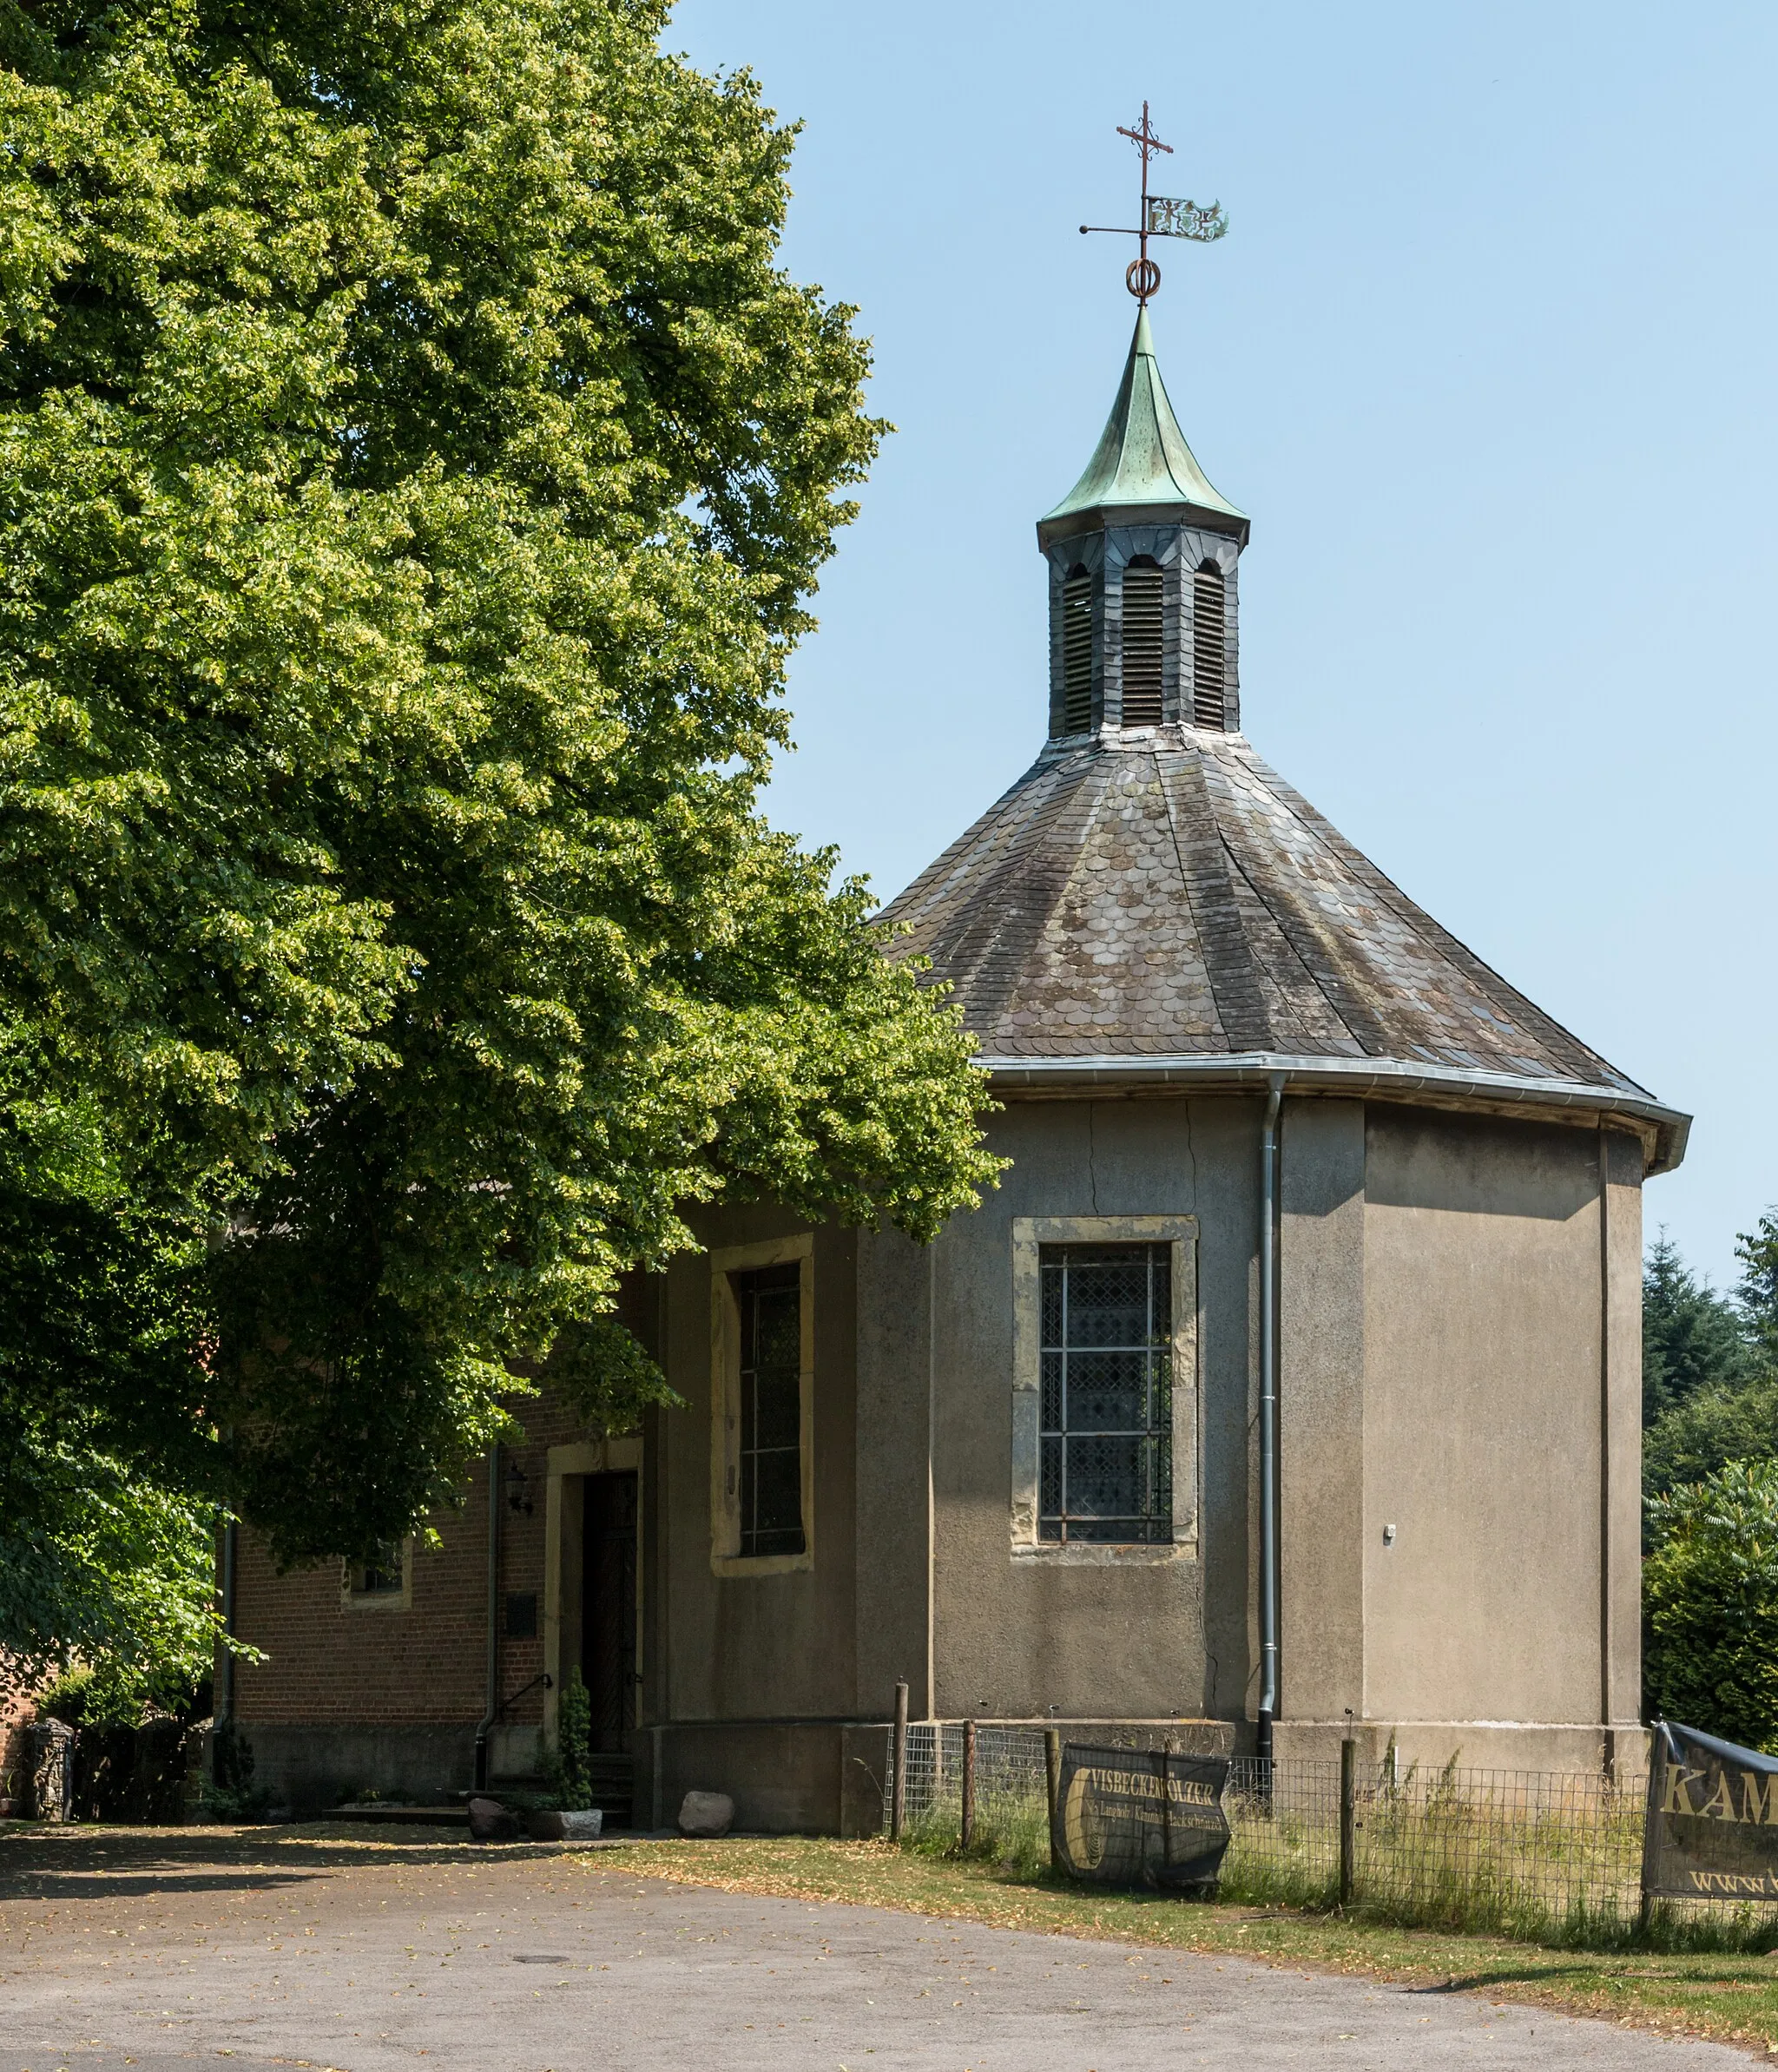 Photo showing: Lady chapel at the Visbeck Manor in the Dernekamp hamlet, Kirchspiel, Dülmen, North Rhine-Westphalia, Germany